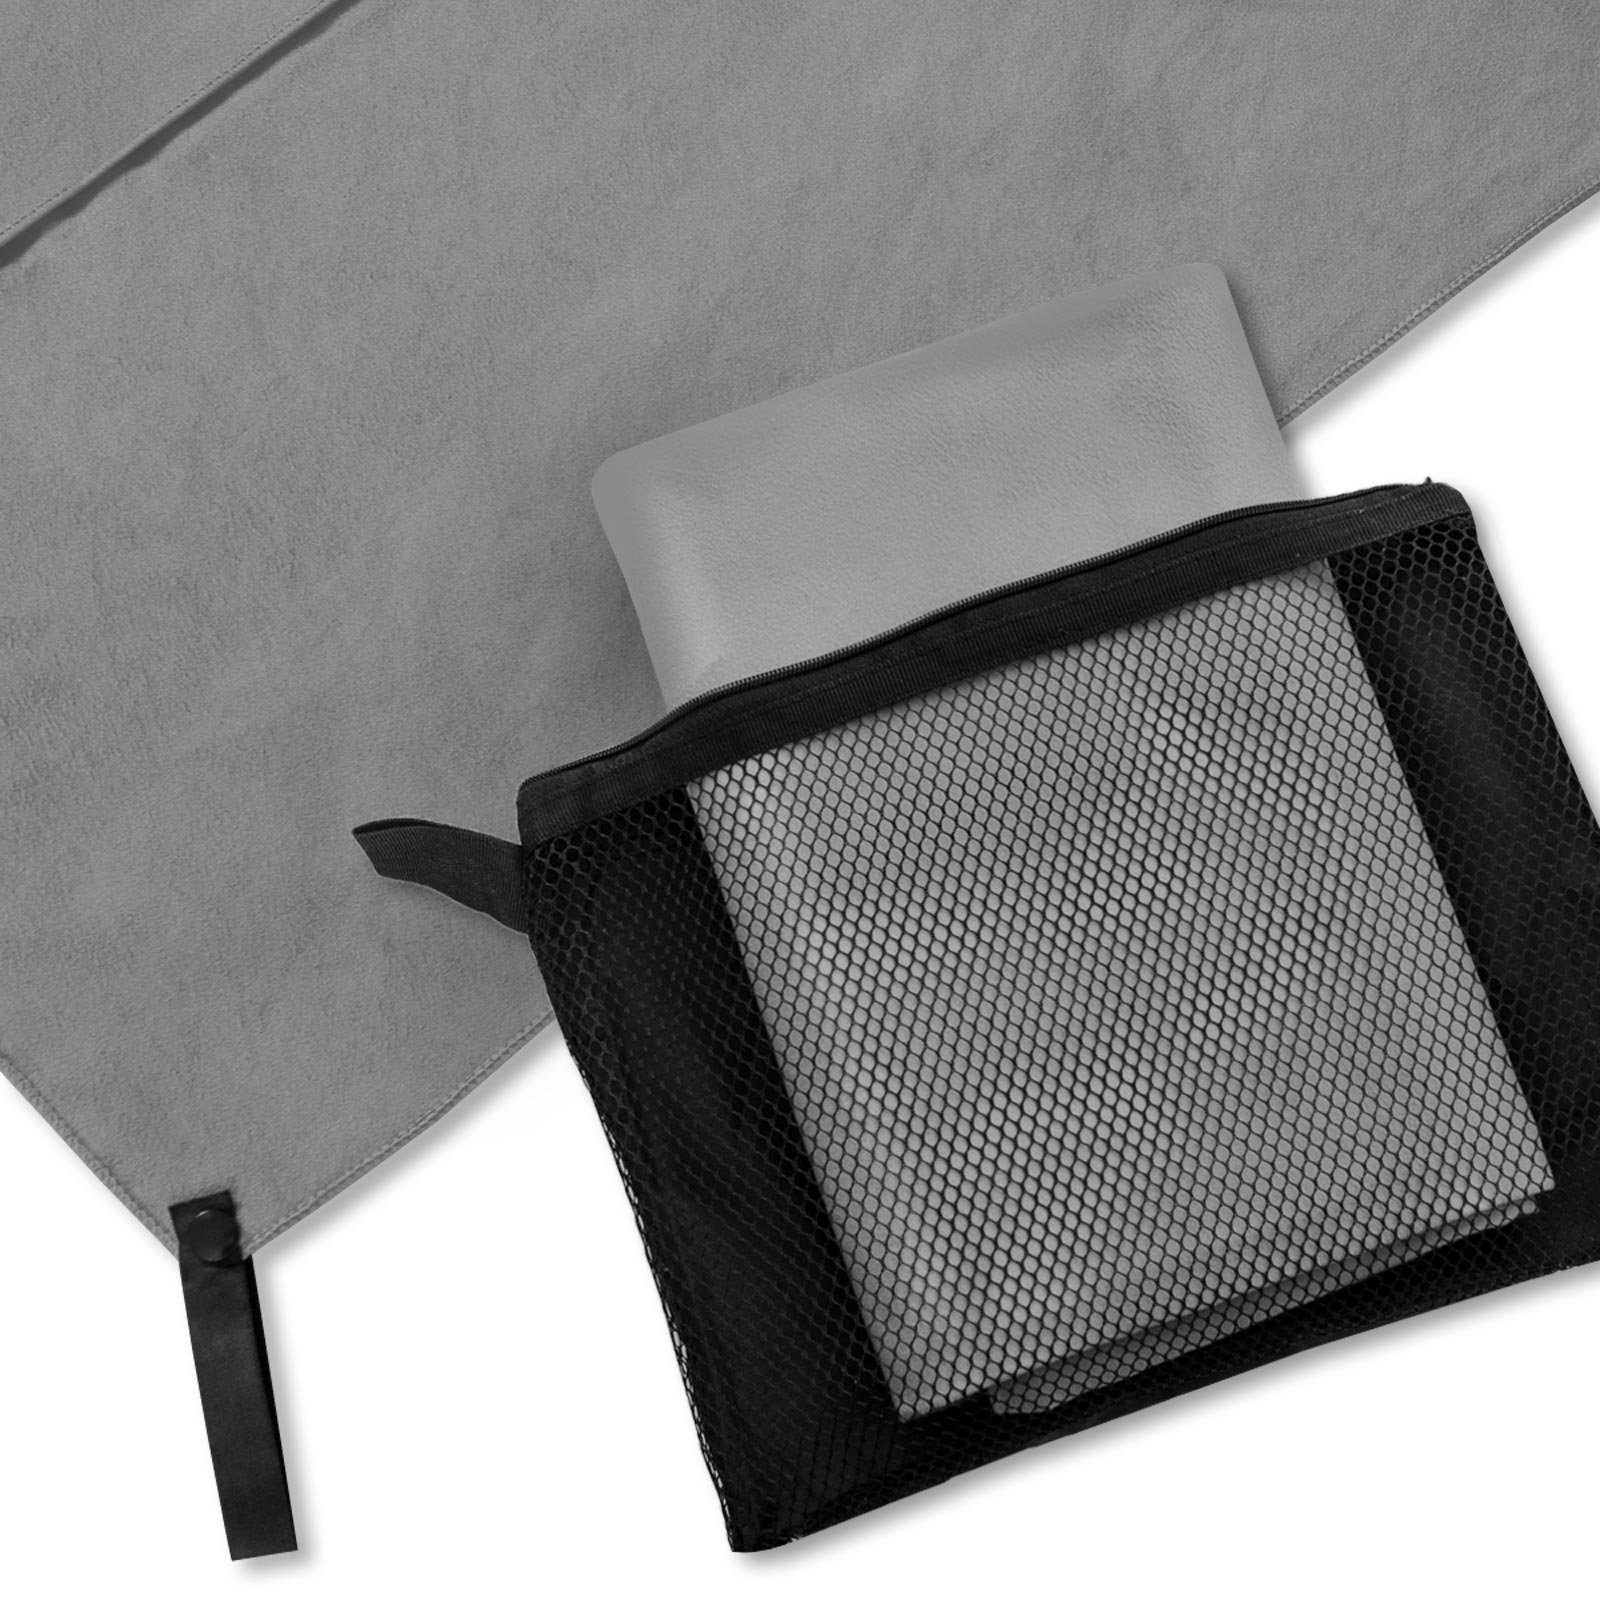 5 Grau 40 Karat cm Handtuch 80 x Farben, Fold Mikrofaser-Handtuch Dry,